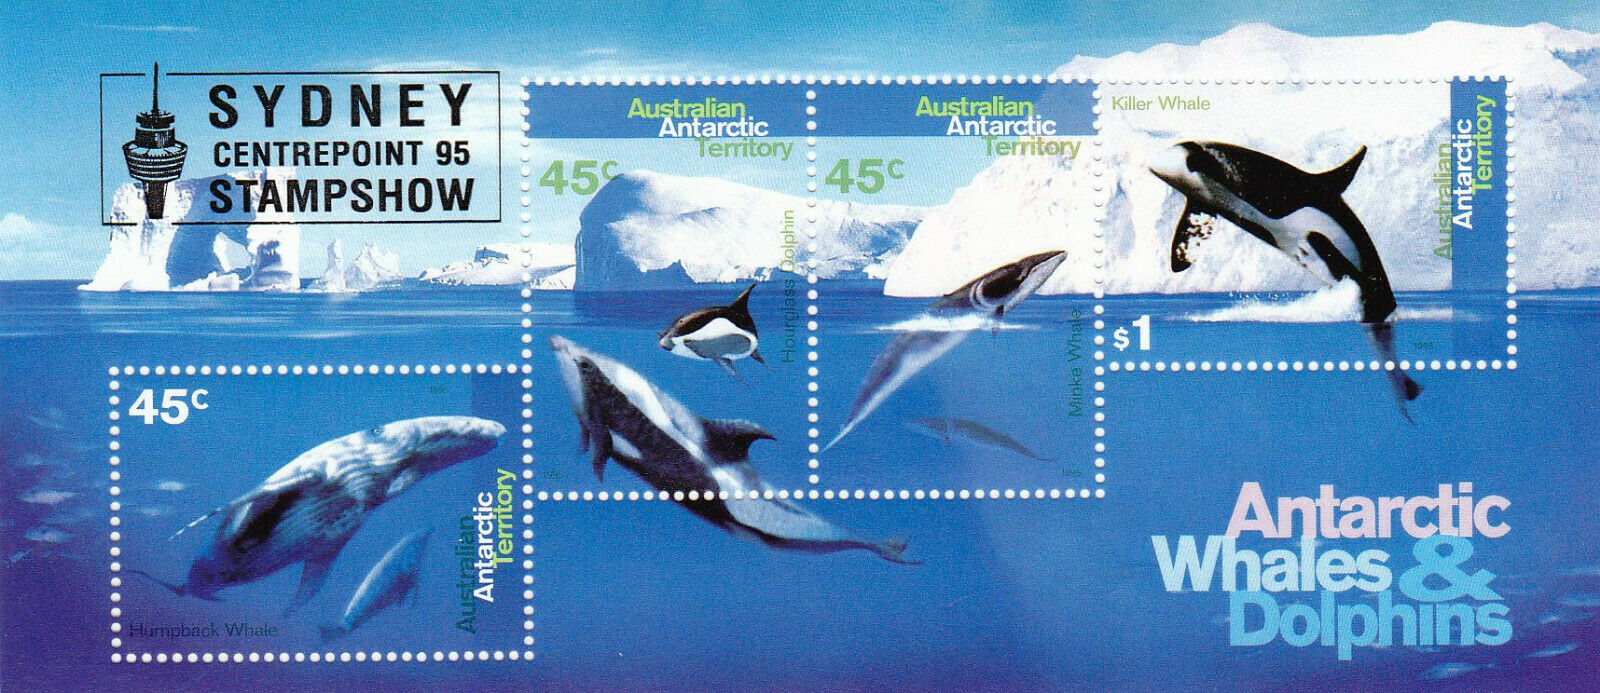 Aust.antarctic Territories 1995 Whales & Dolphins Ms - Sydney'95 - Vfmnh